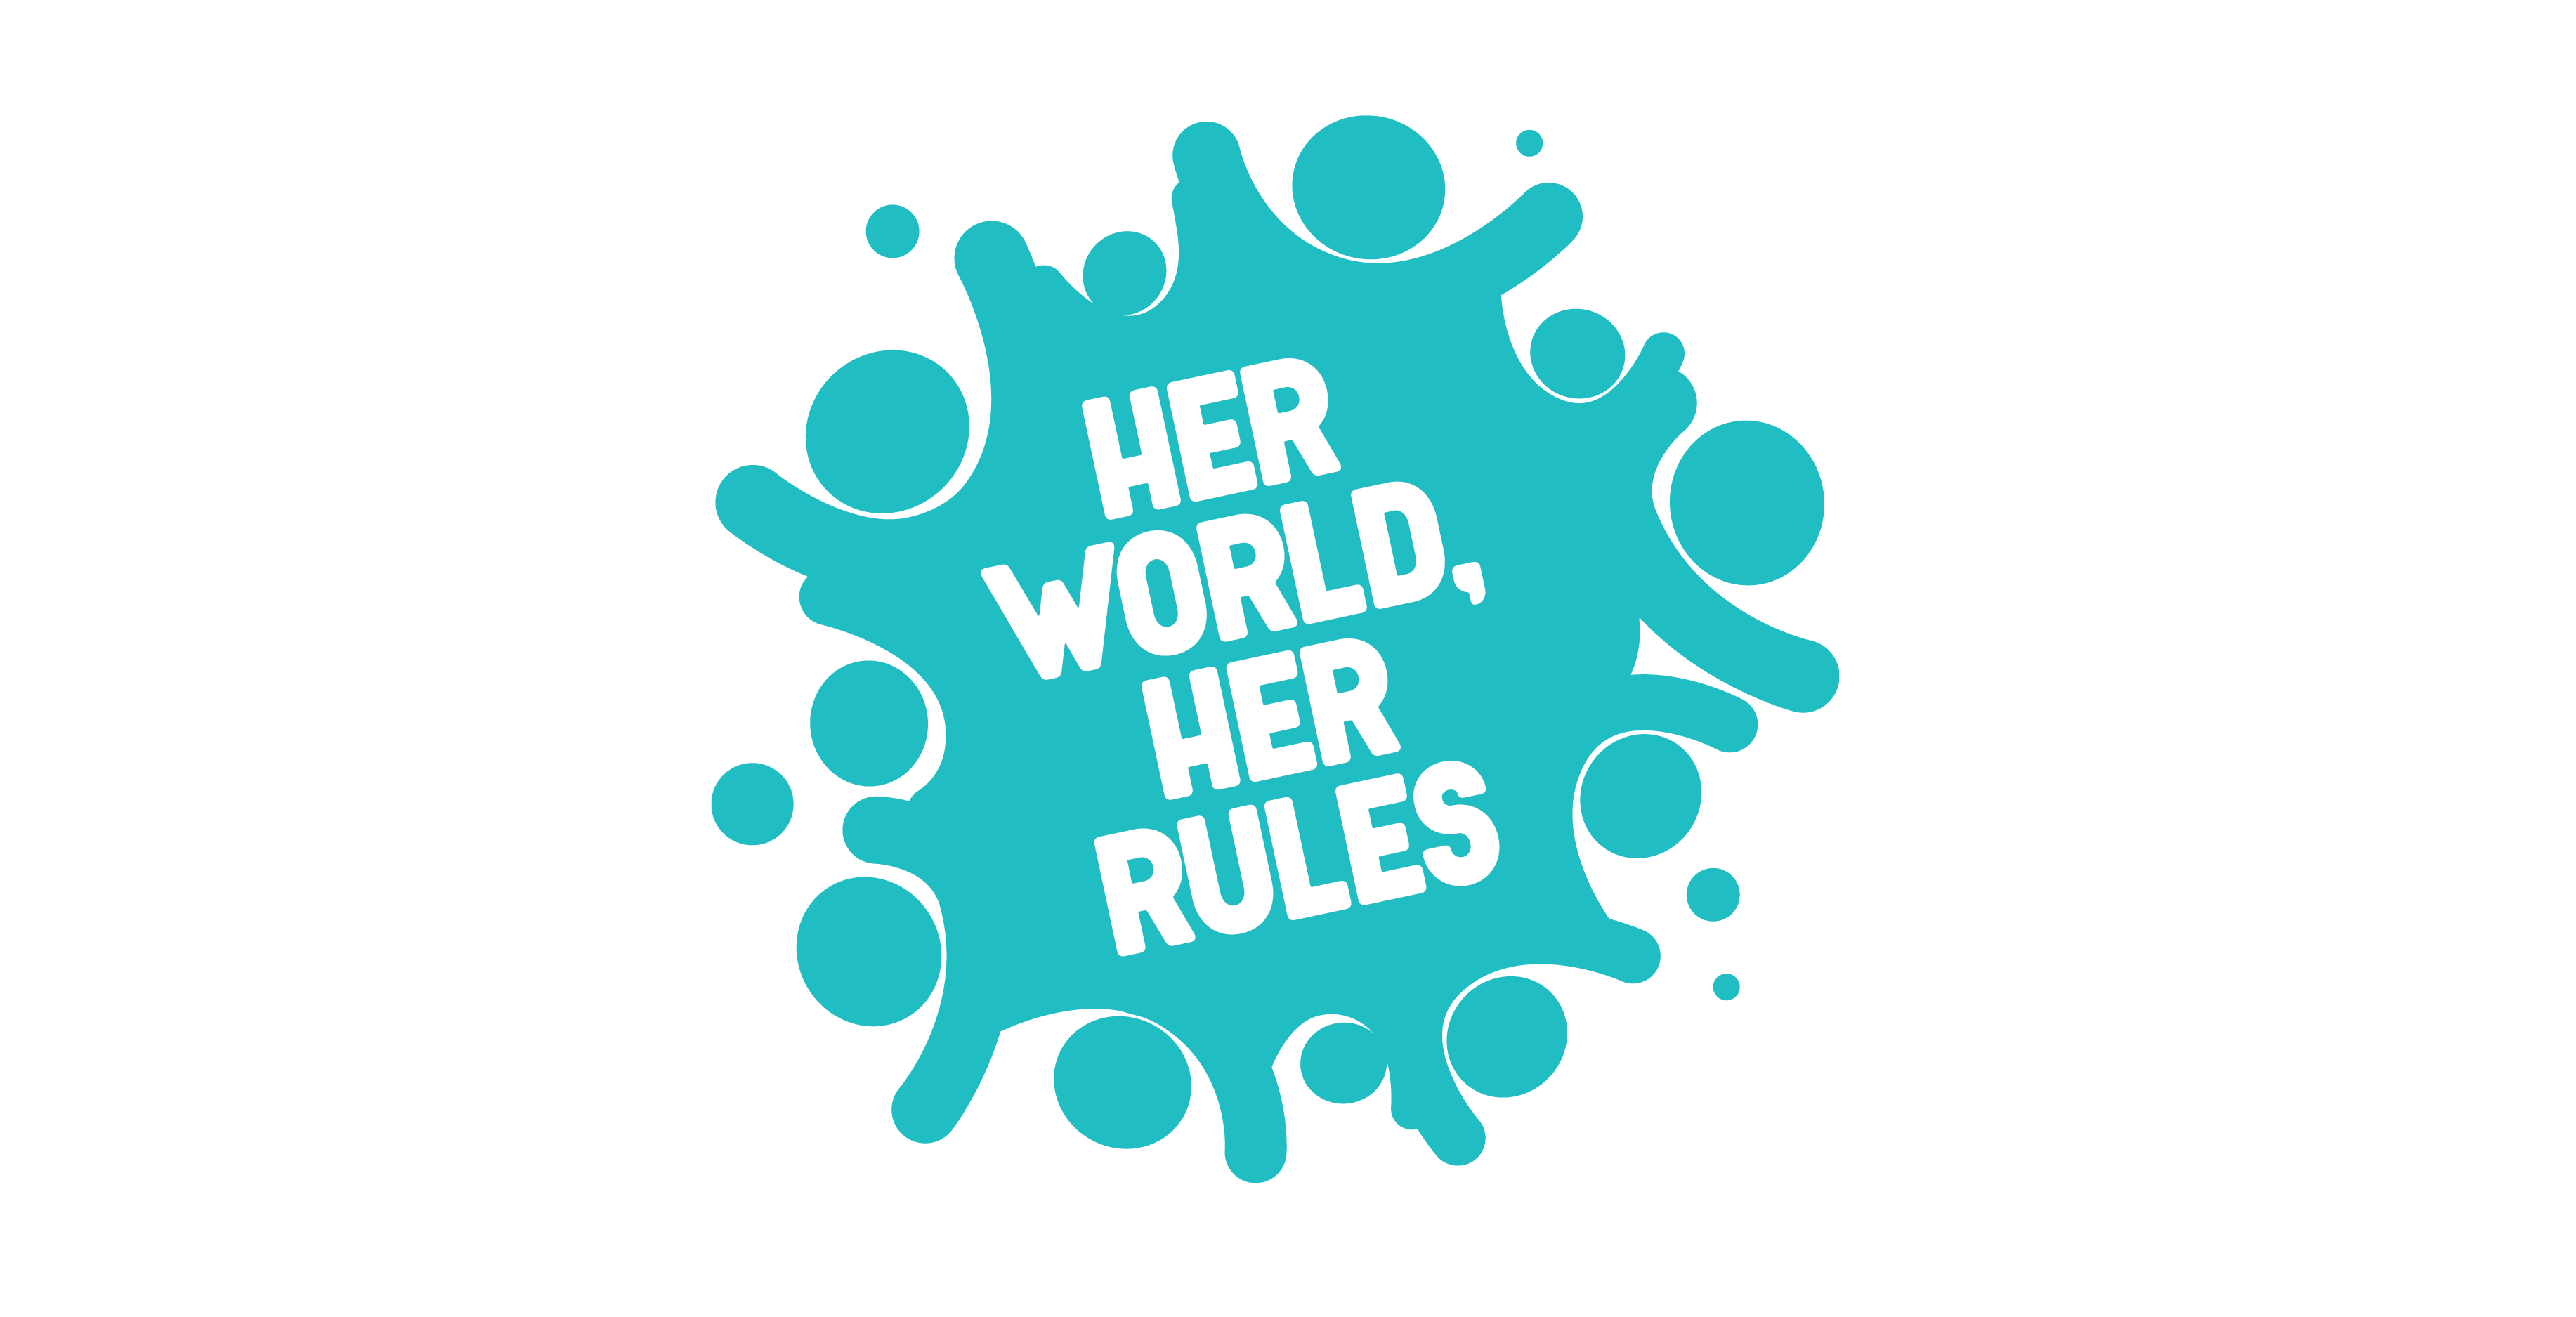 FIBA "Her World, Her Rules".